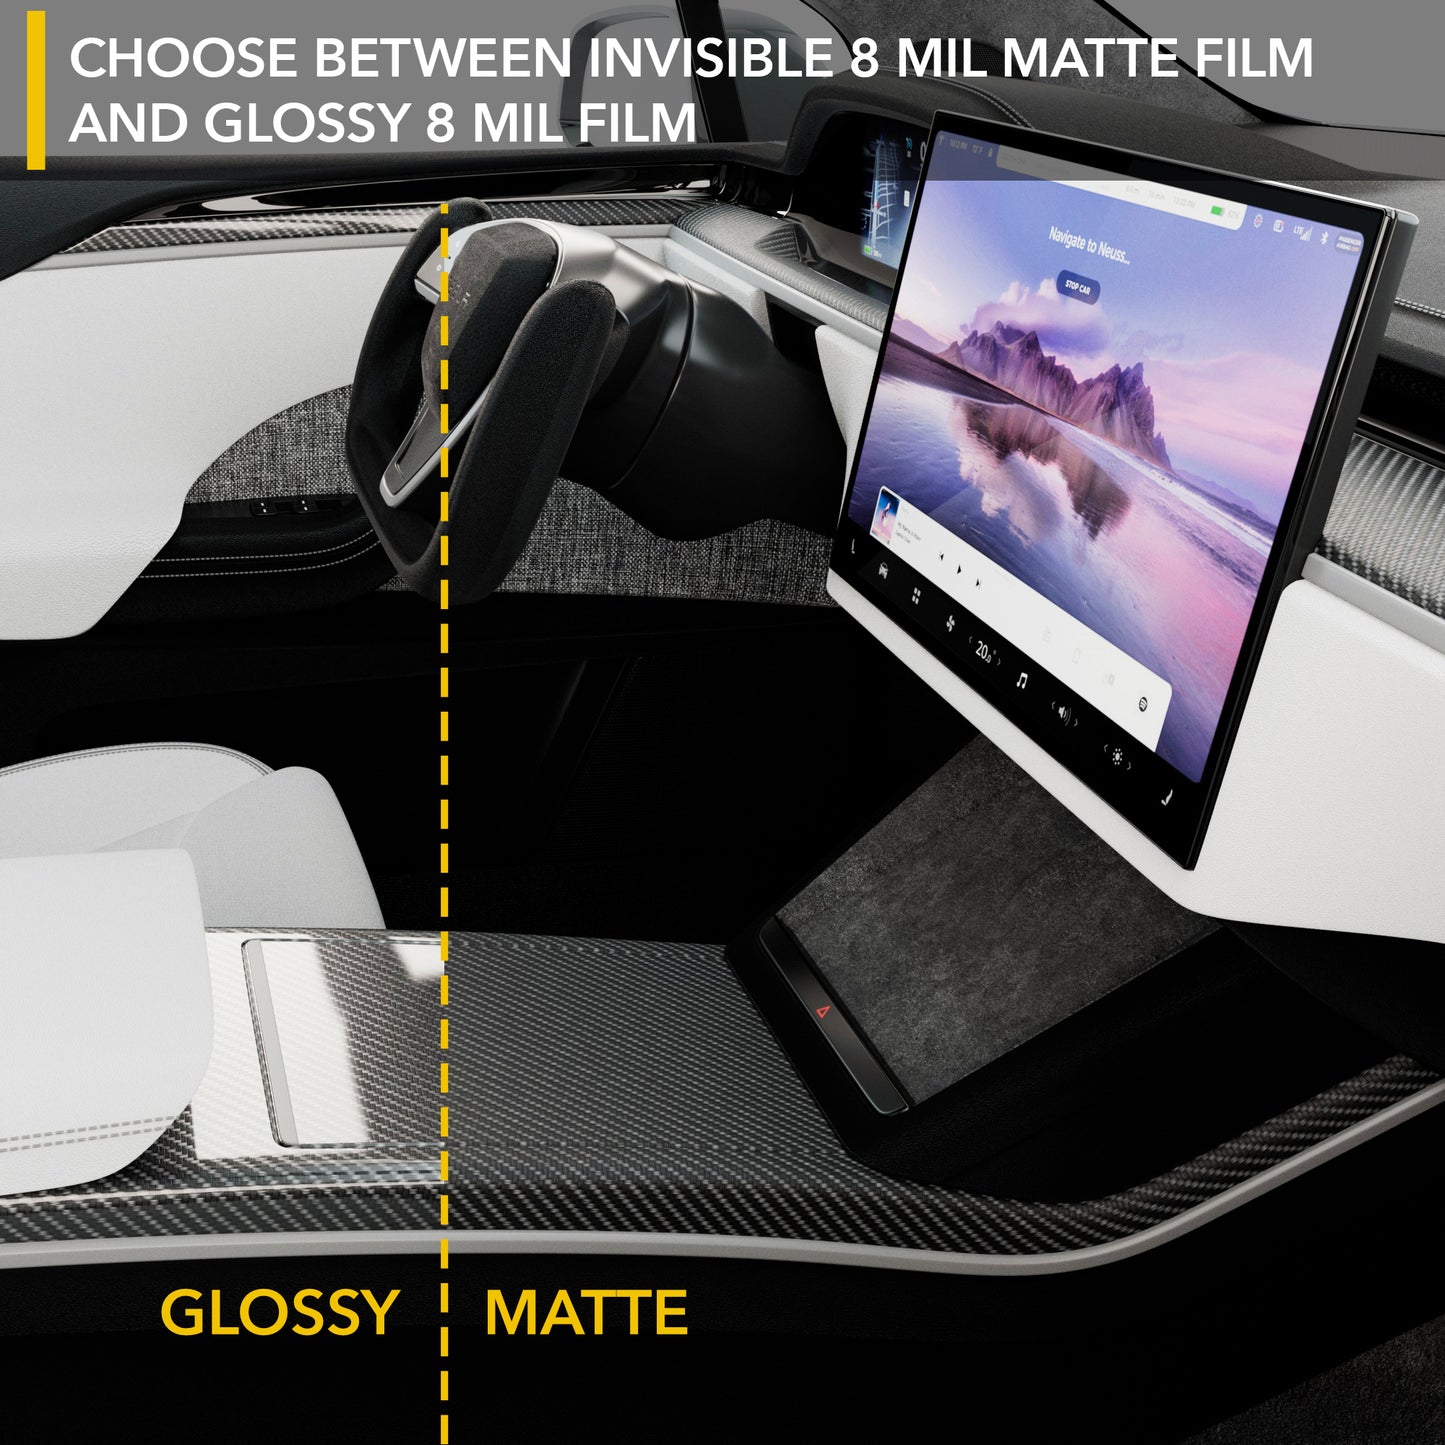 Interior PPF Kit for Tesla Model X Plaid (2021-2024 Refresh) - Paint Protection Film Wrap for All Carbon Fiber Trims